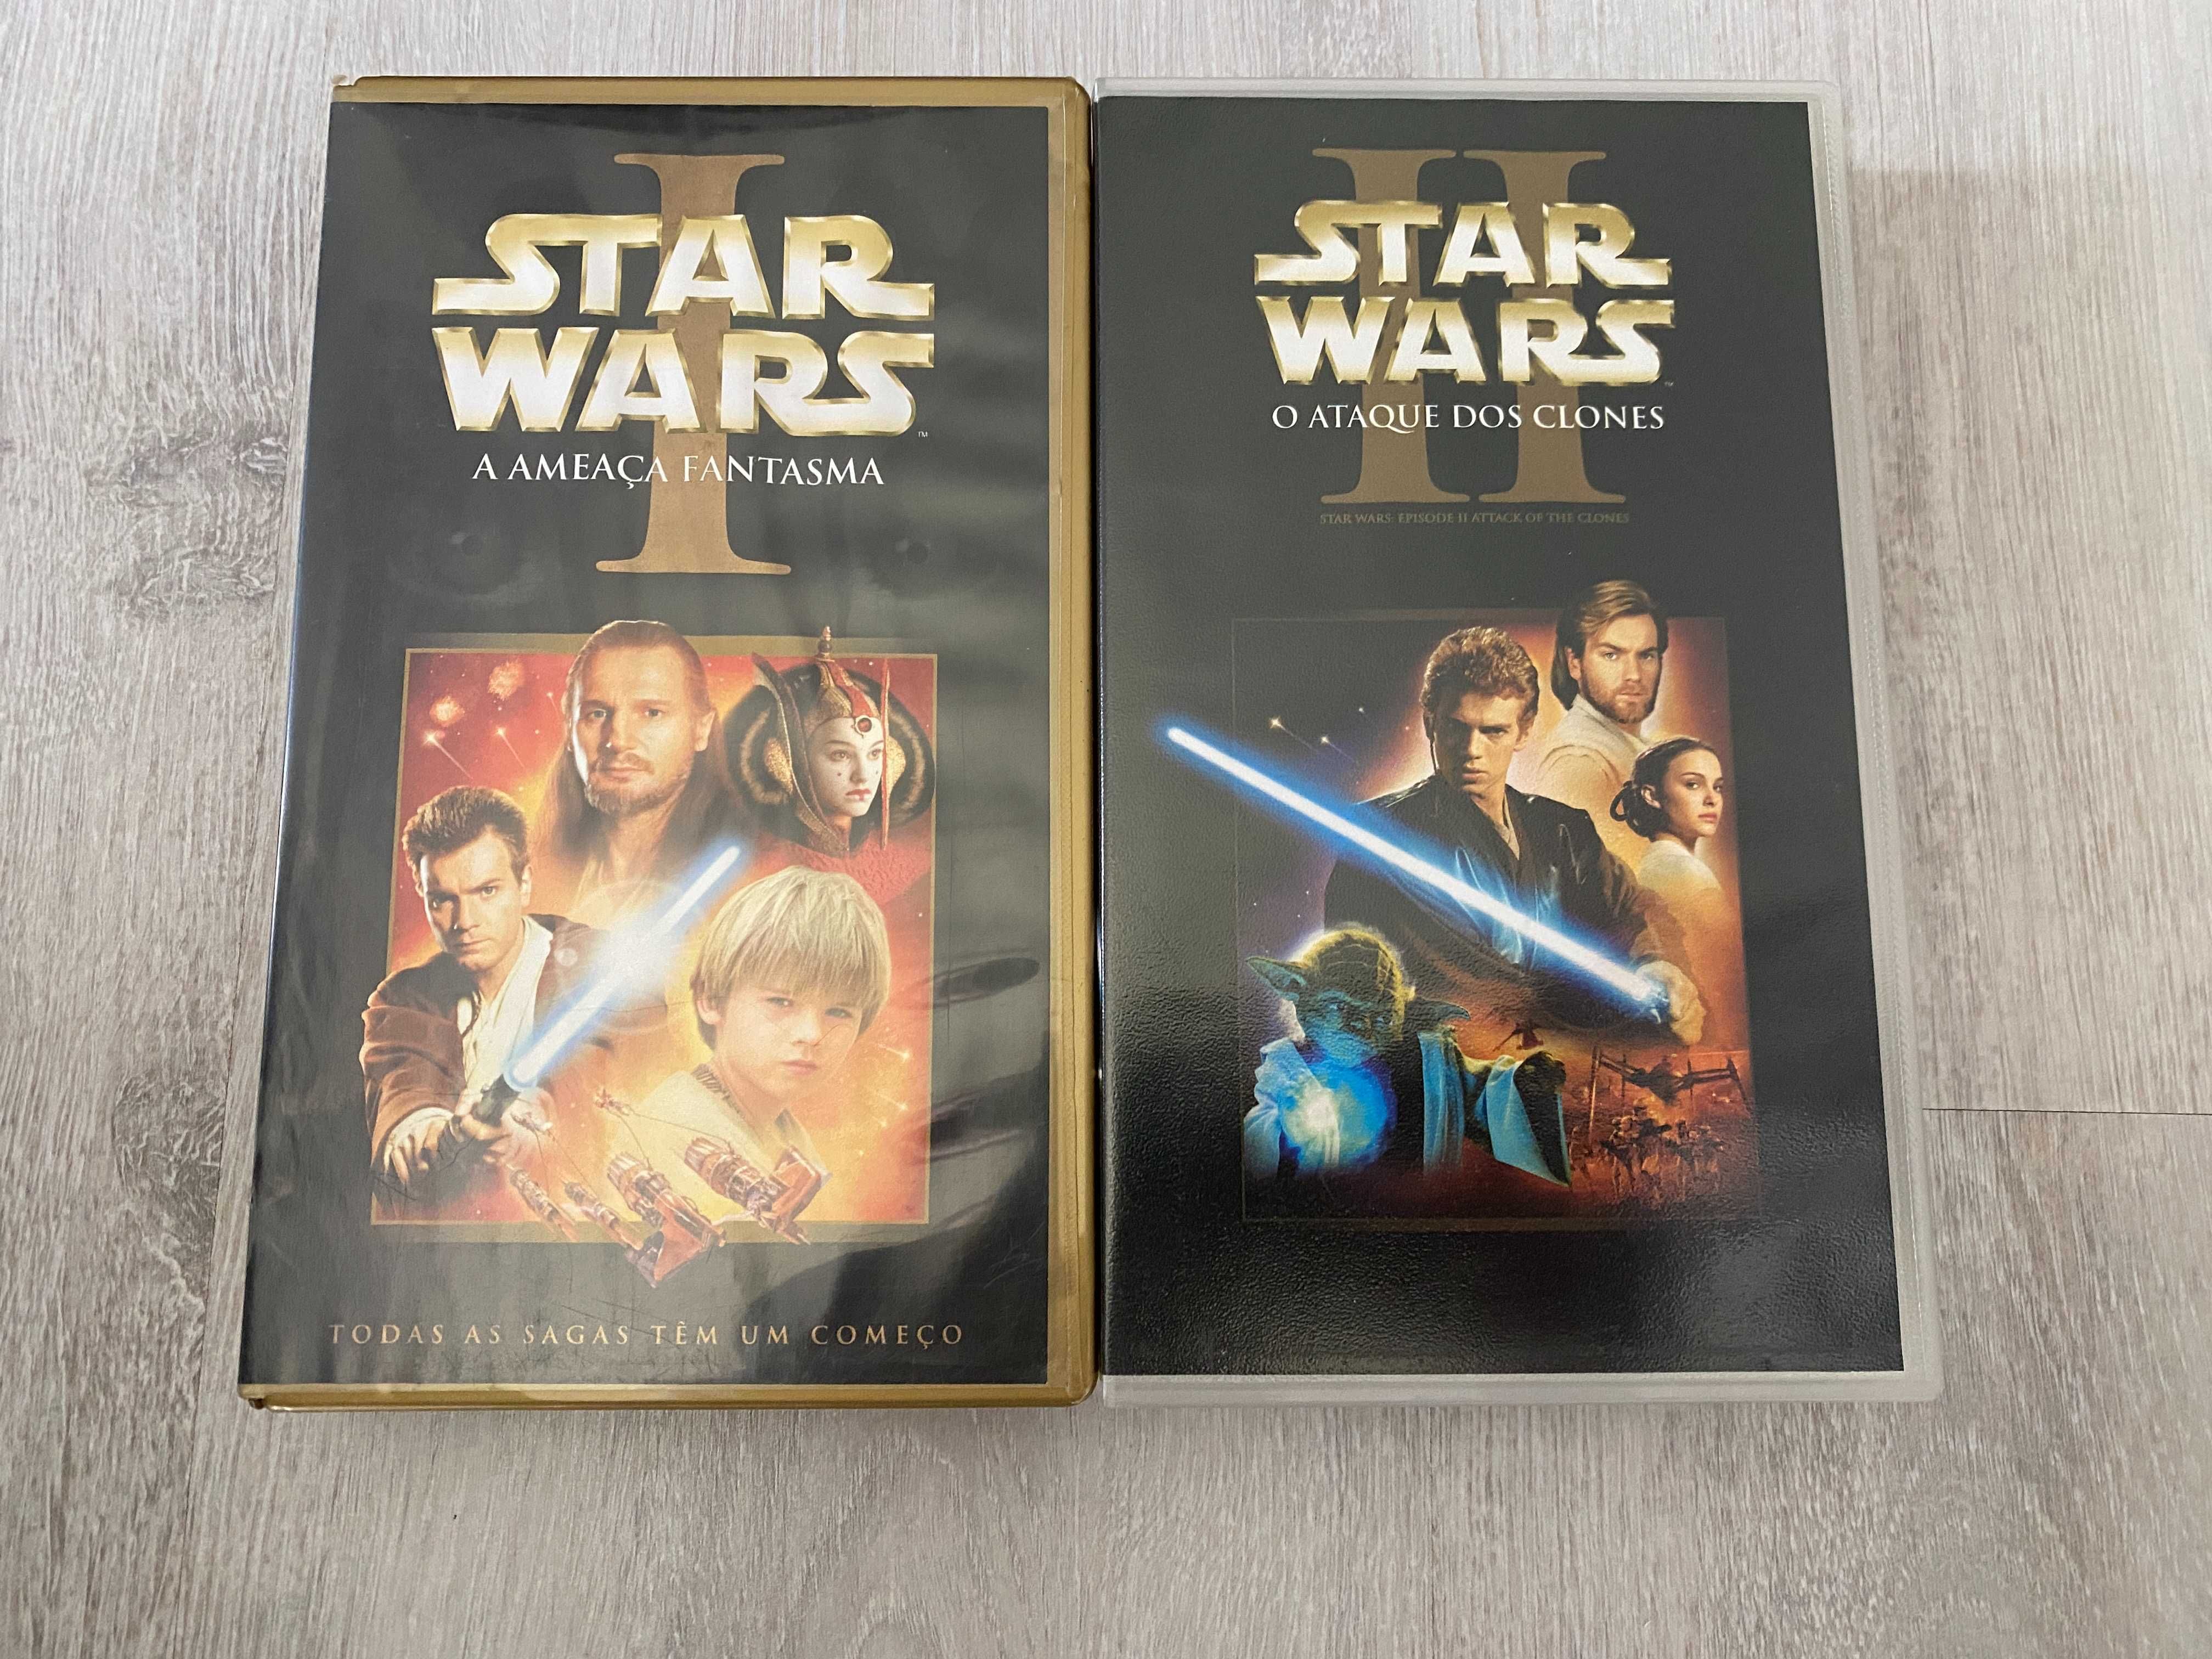 Star Wars - Guerra das Estrelas (VHS)